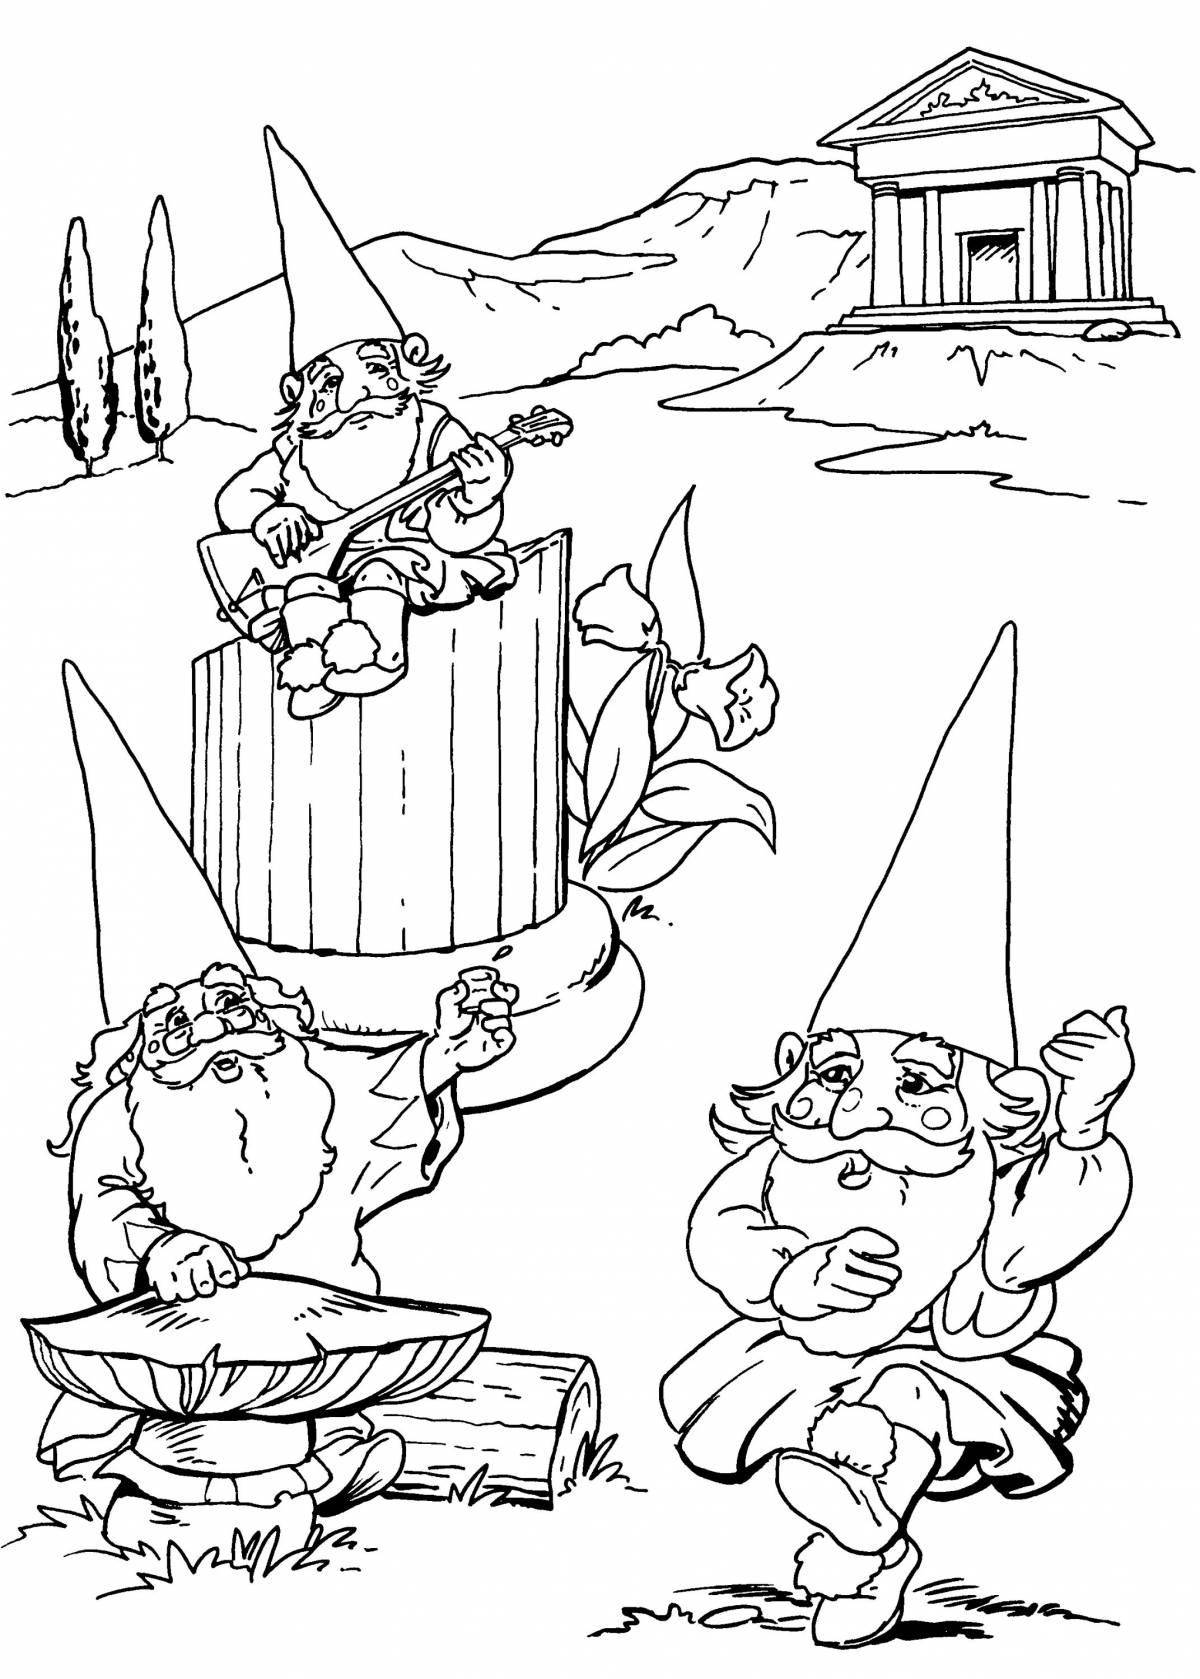 Naughty gnomes coloring page